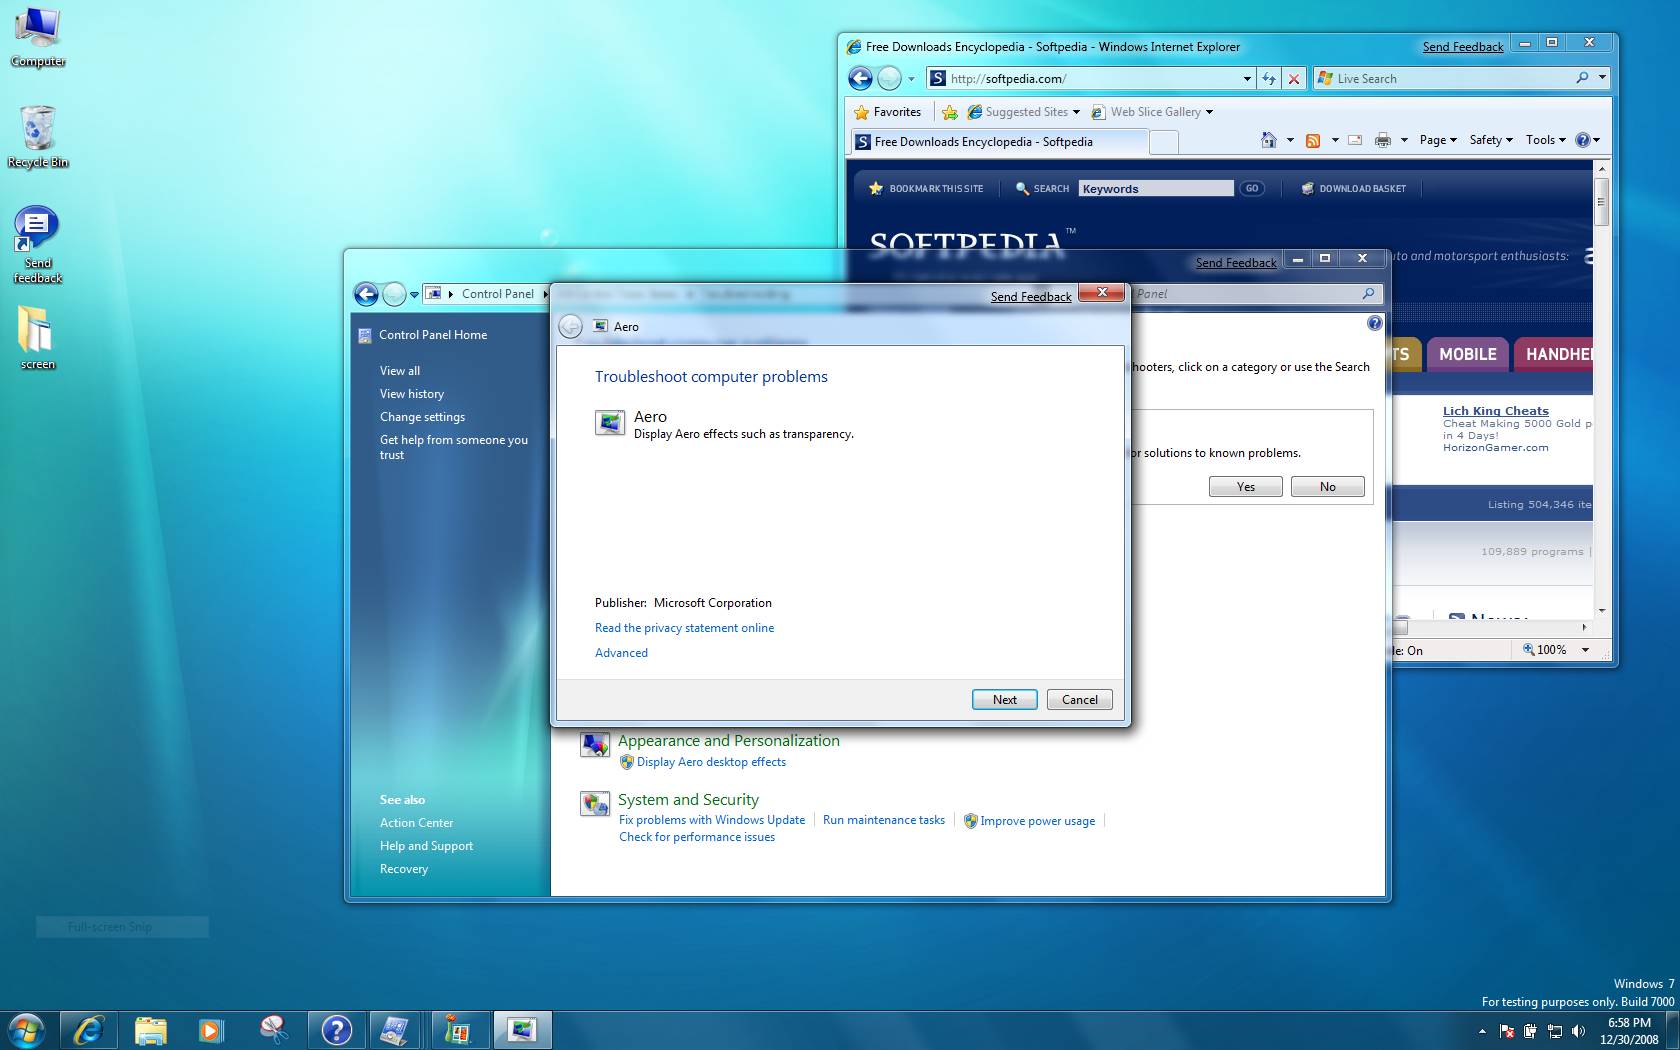 Windows 7 Beta Build 7000 Screenshots Gallery